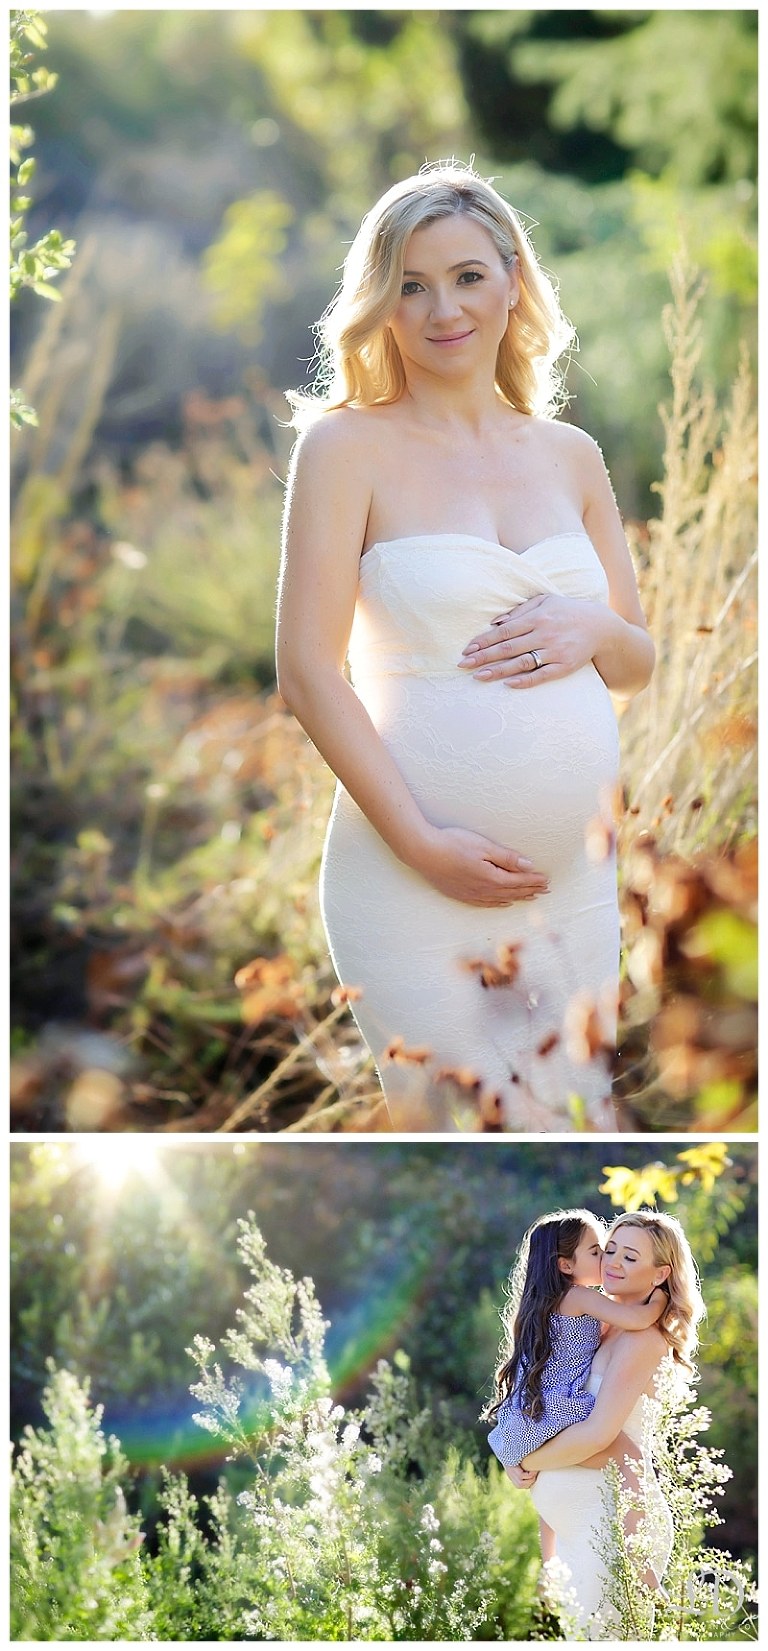 sweet maternity photoshoot-lori dorman photography-maternity boudoir-professional photographer_4113.jpg